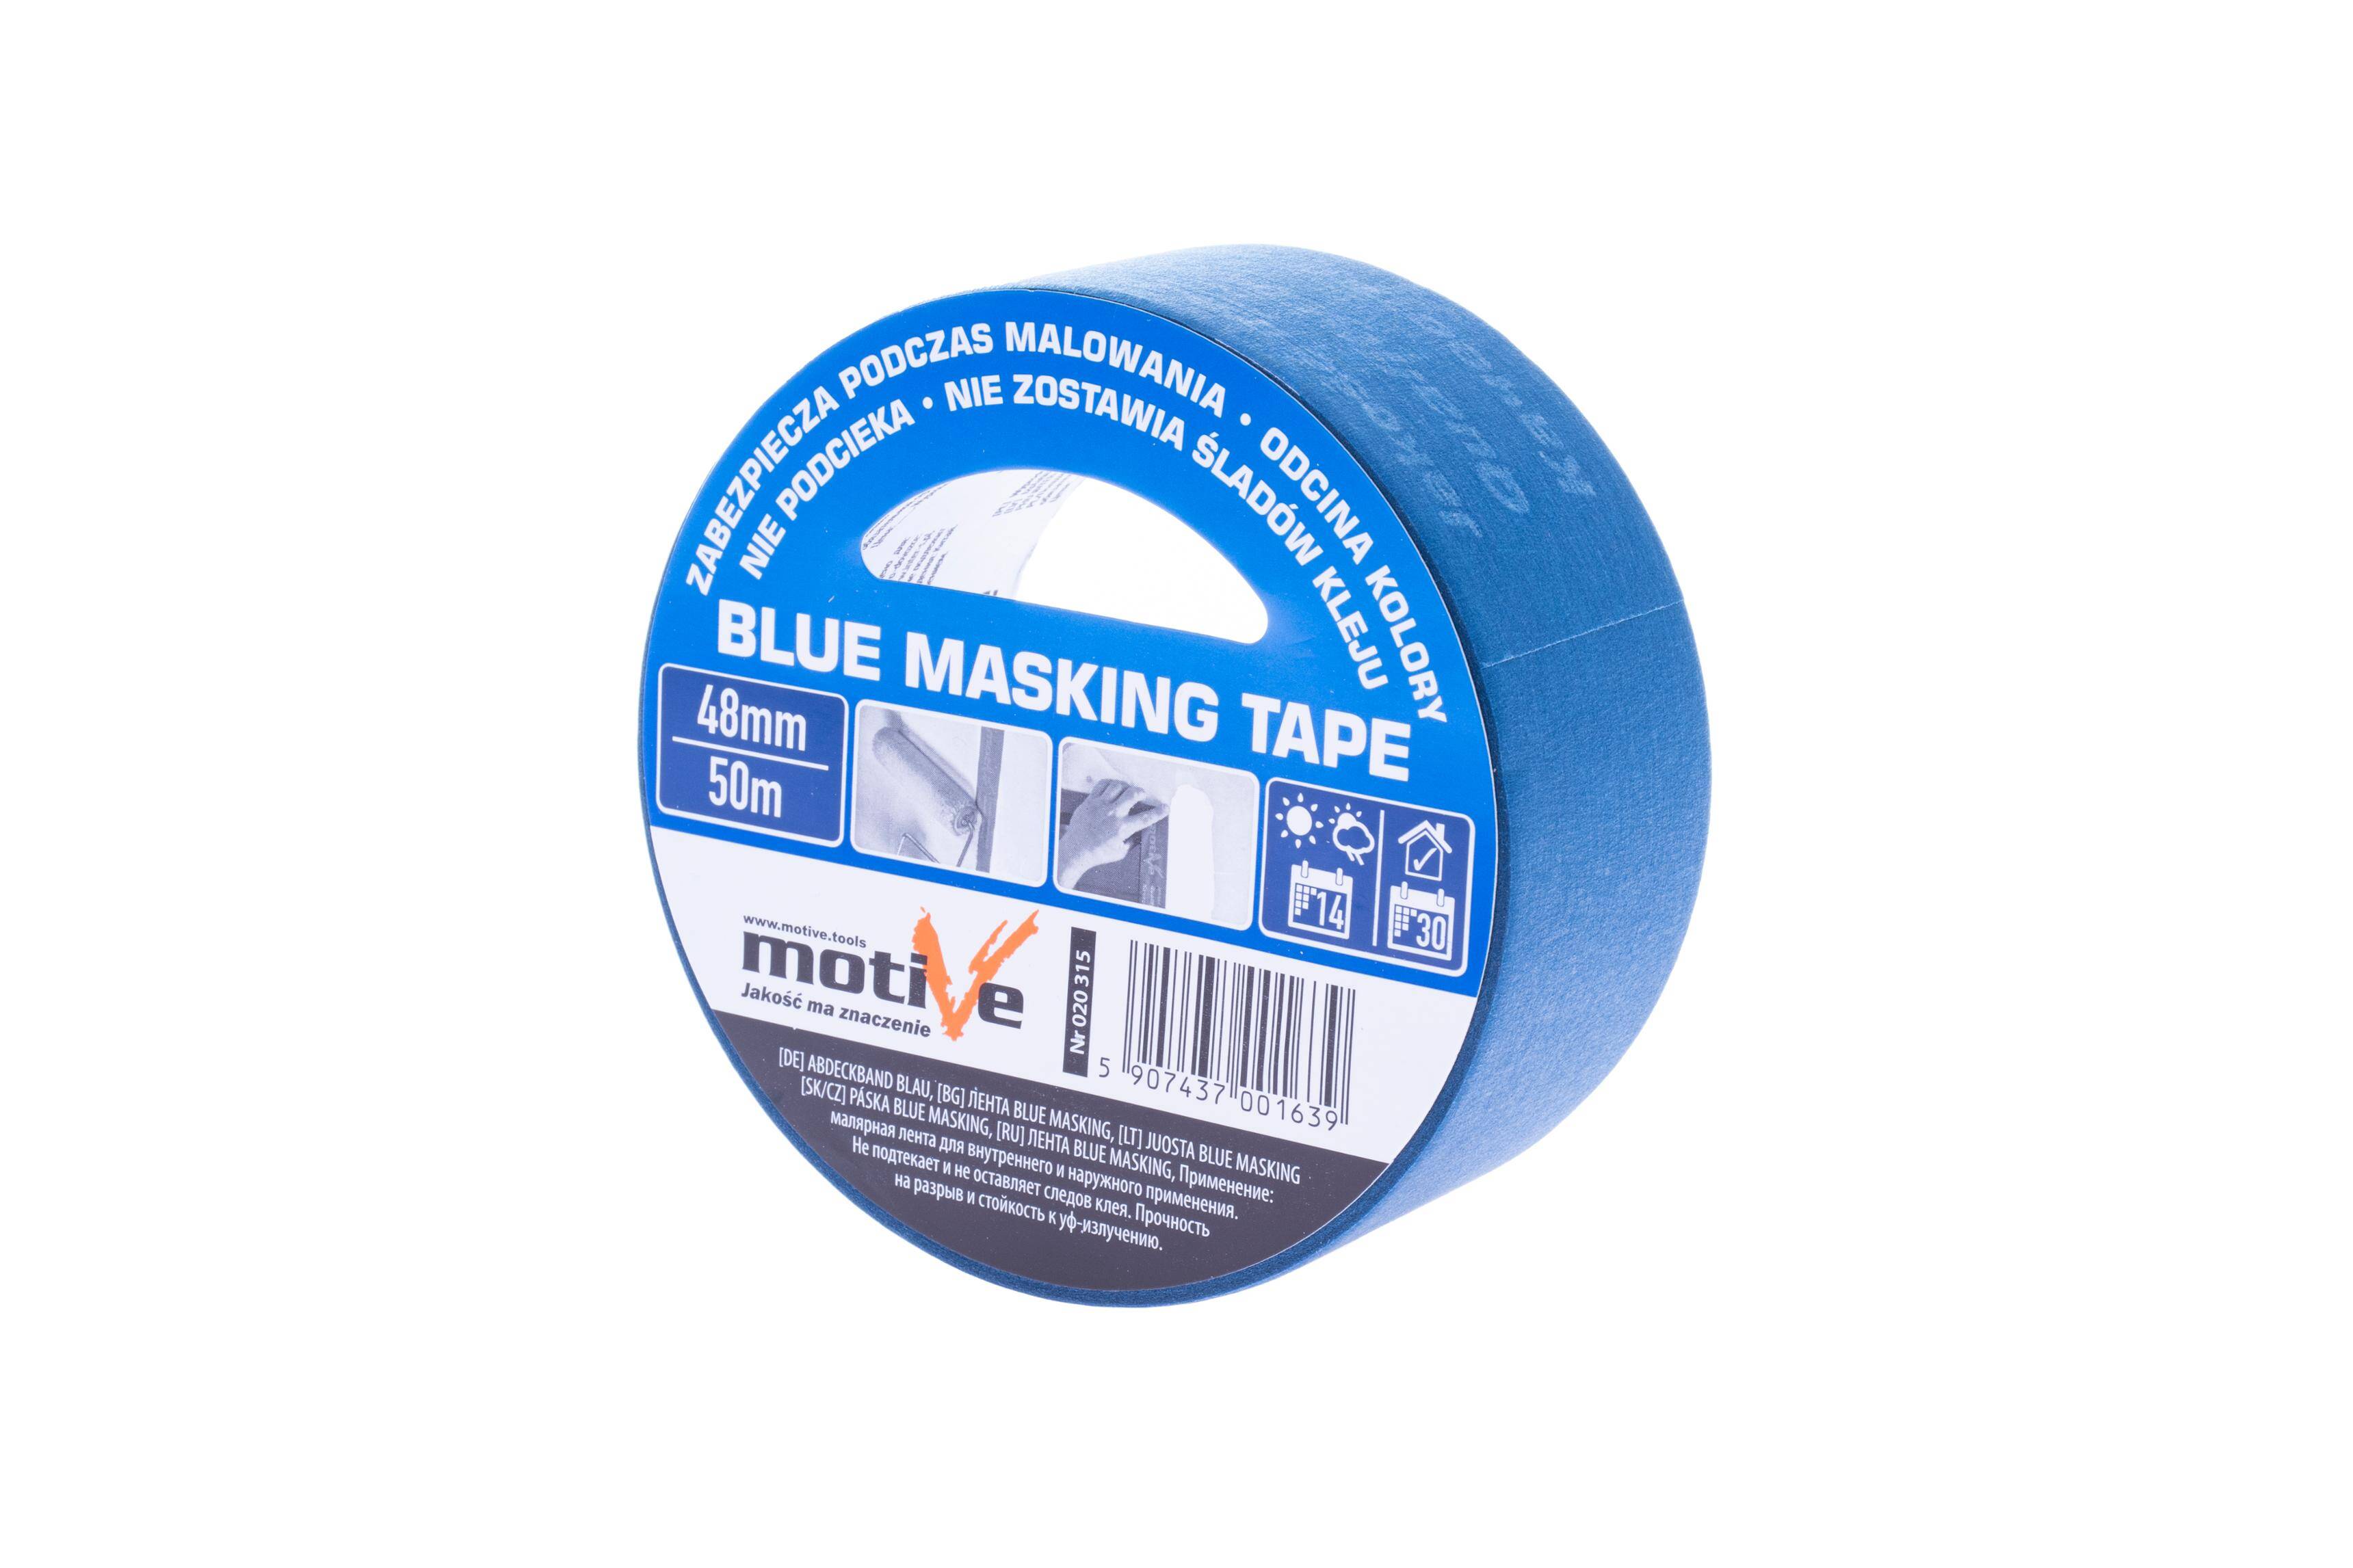 Blue masking tape 48mm/50m